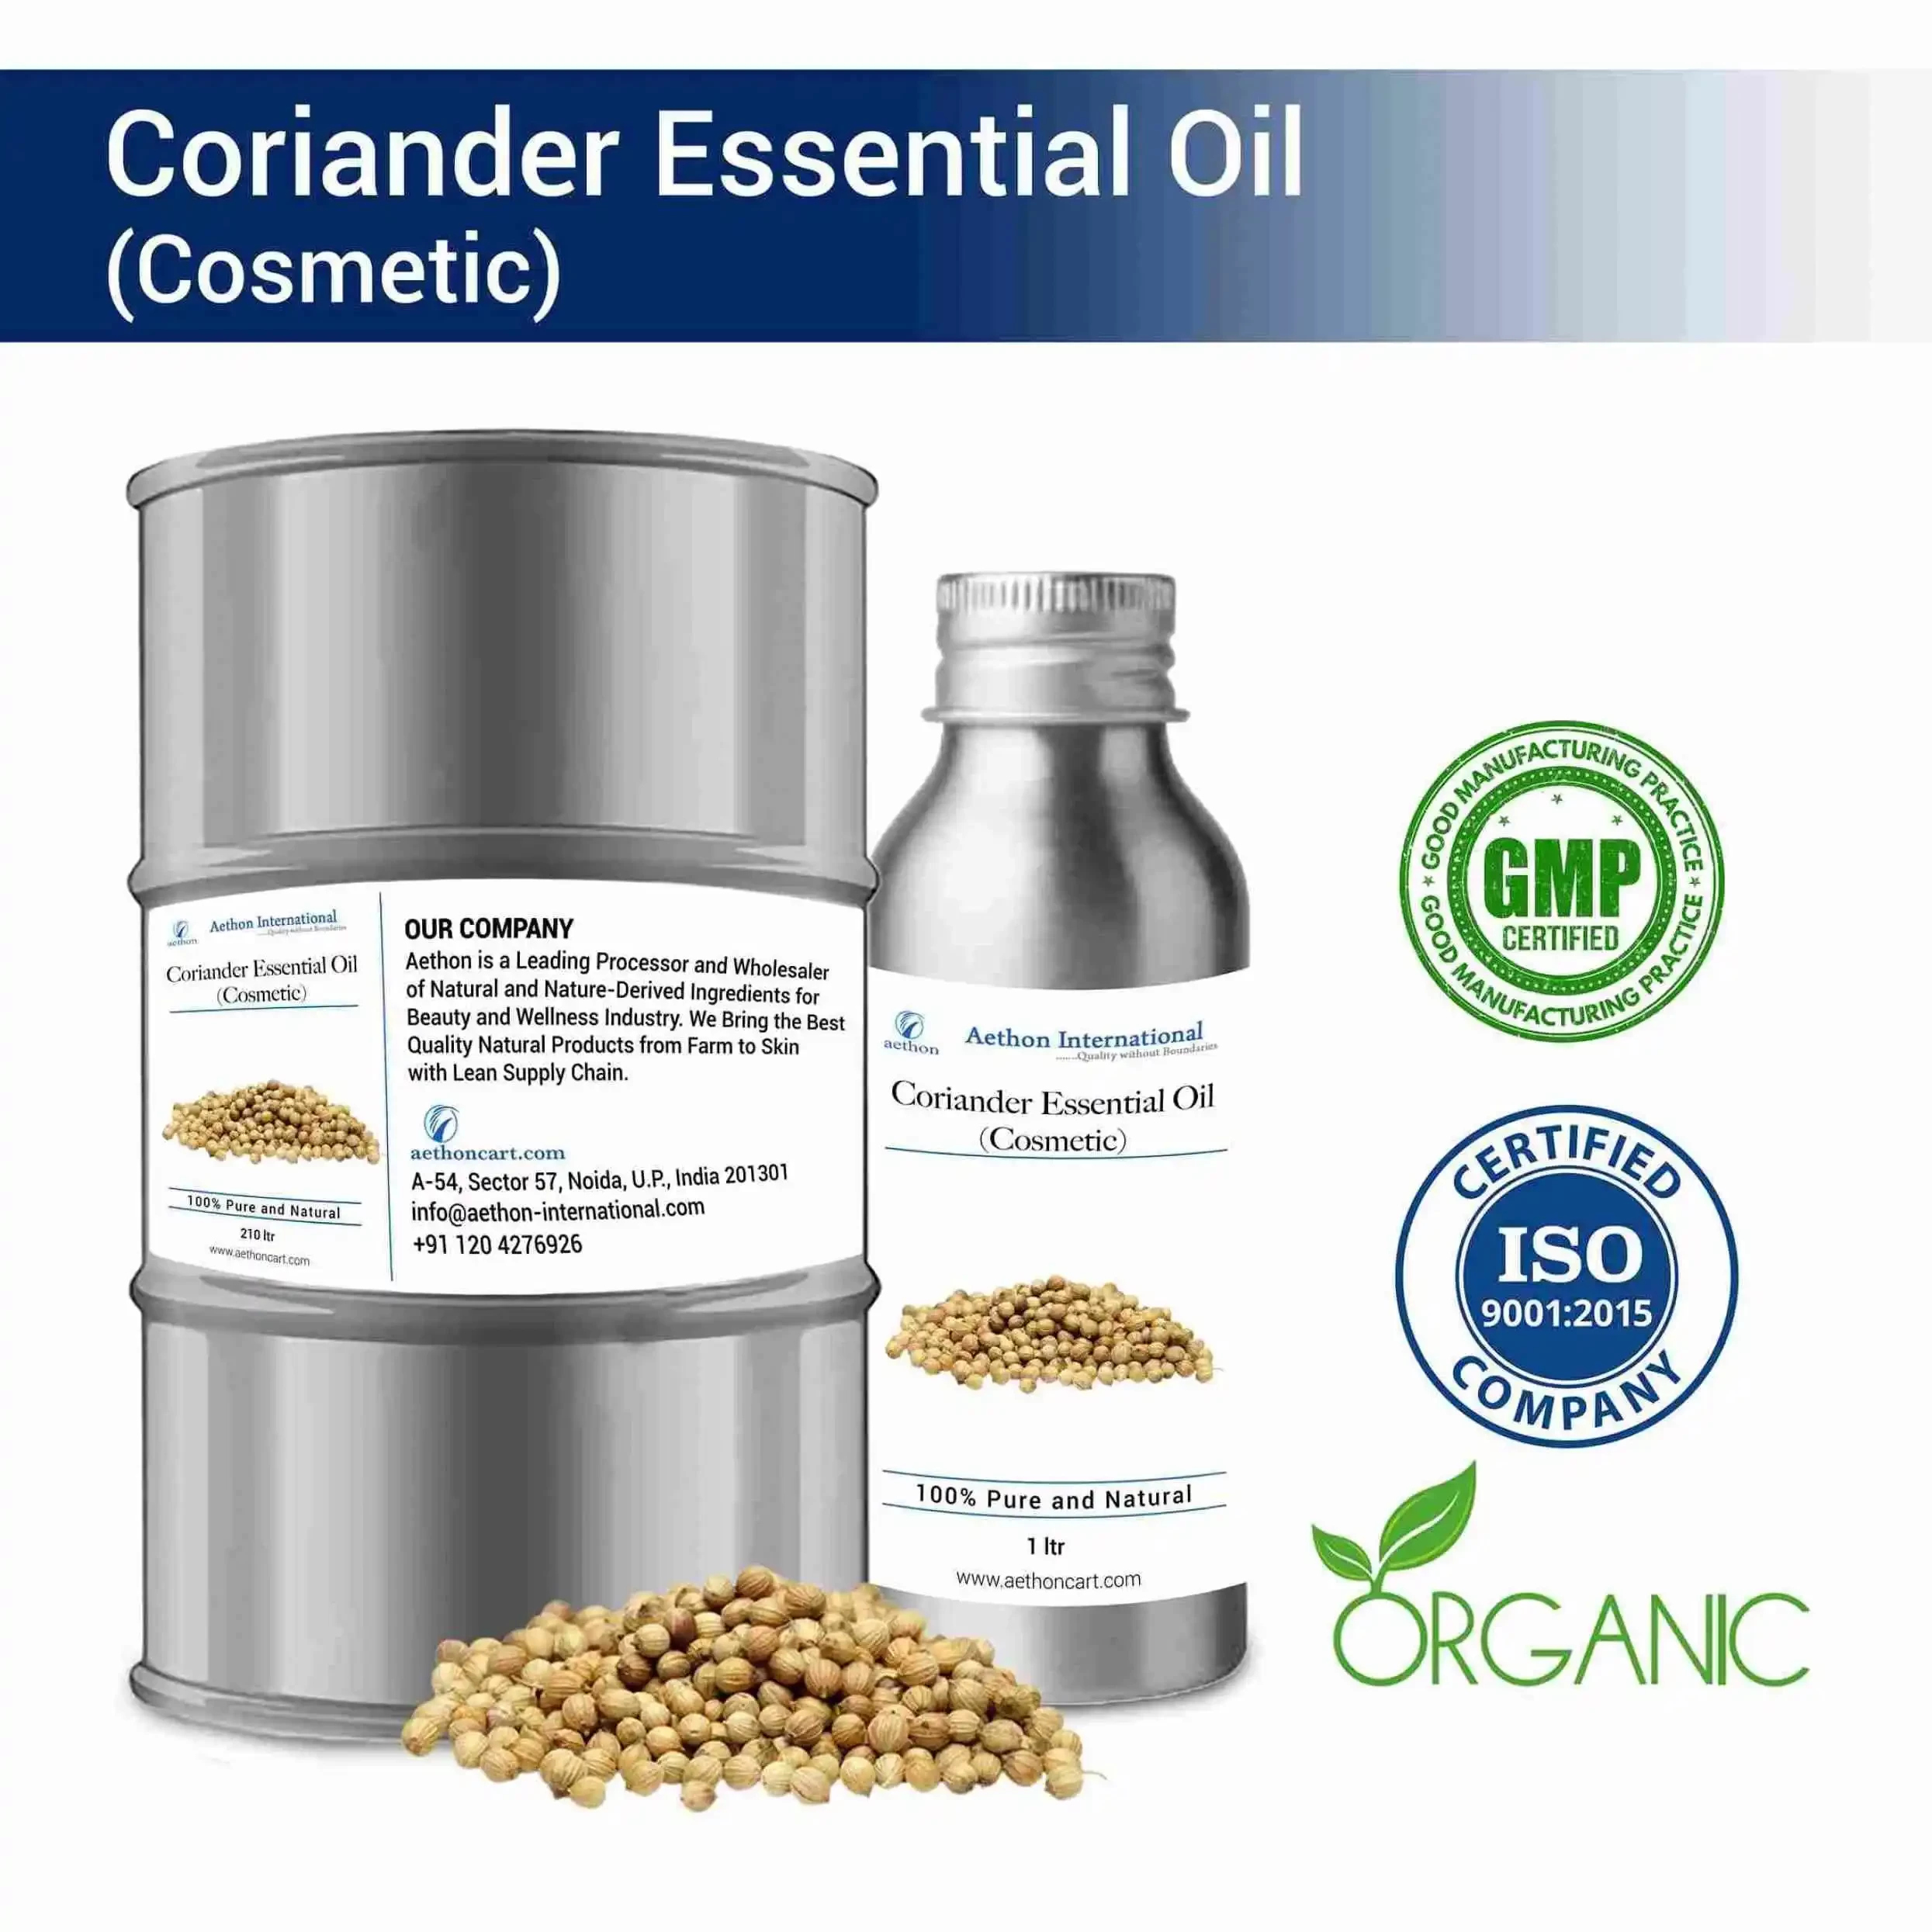 Coriander Essential Oil (Cosmetic)